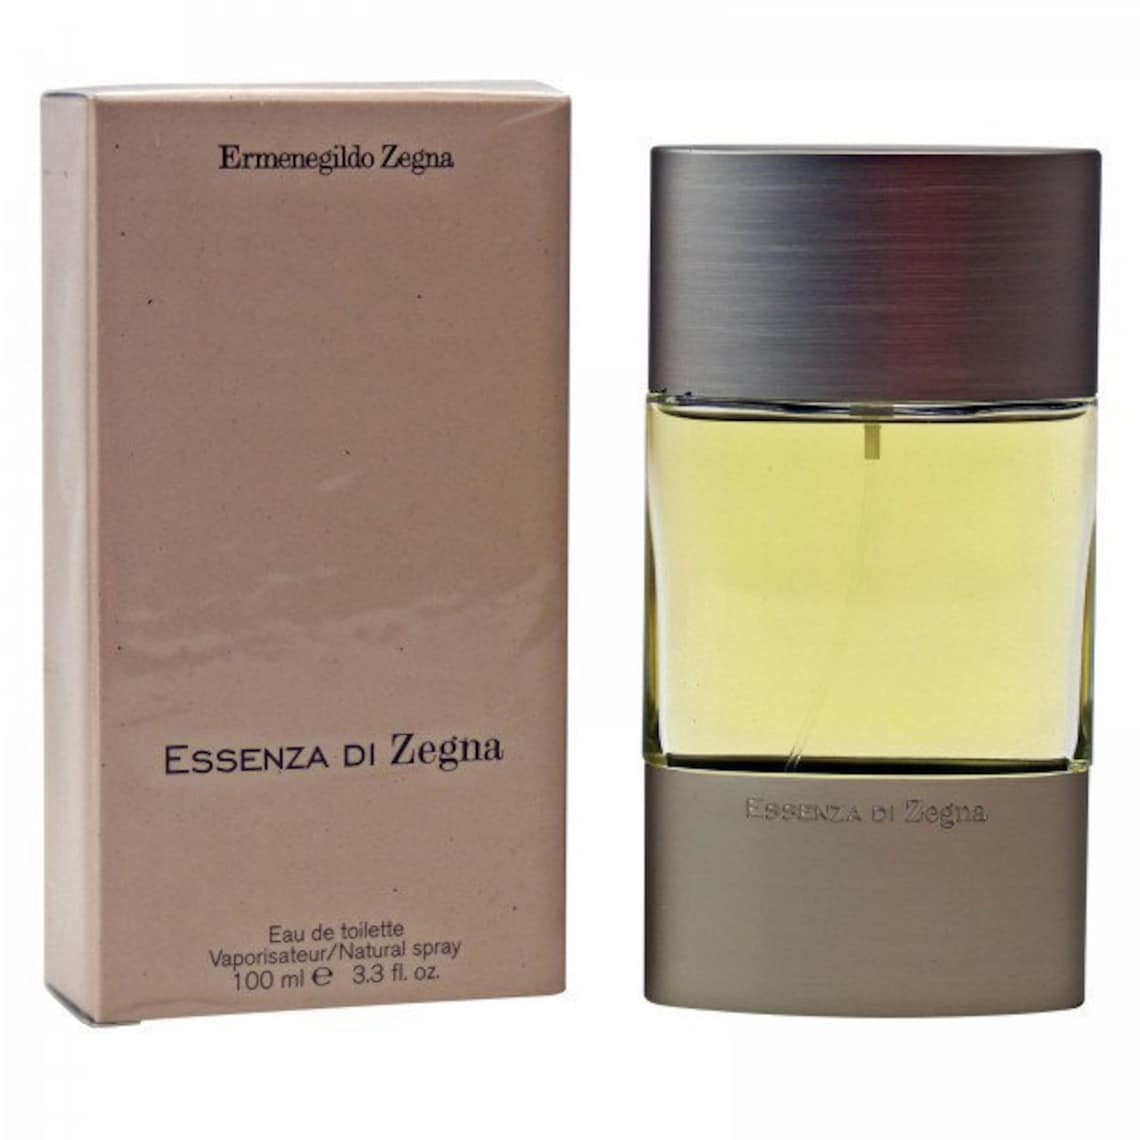 Essenza Di Zegna by Ermenegildo Zegna 3.3 oz 100 ml Eau De | Etsy